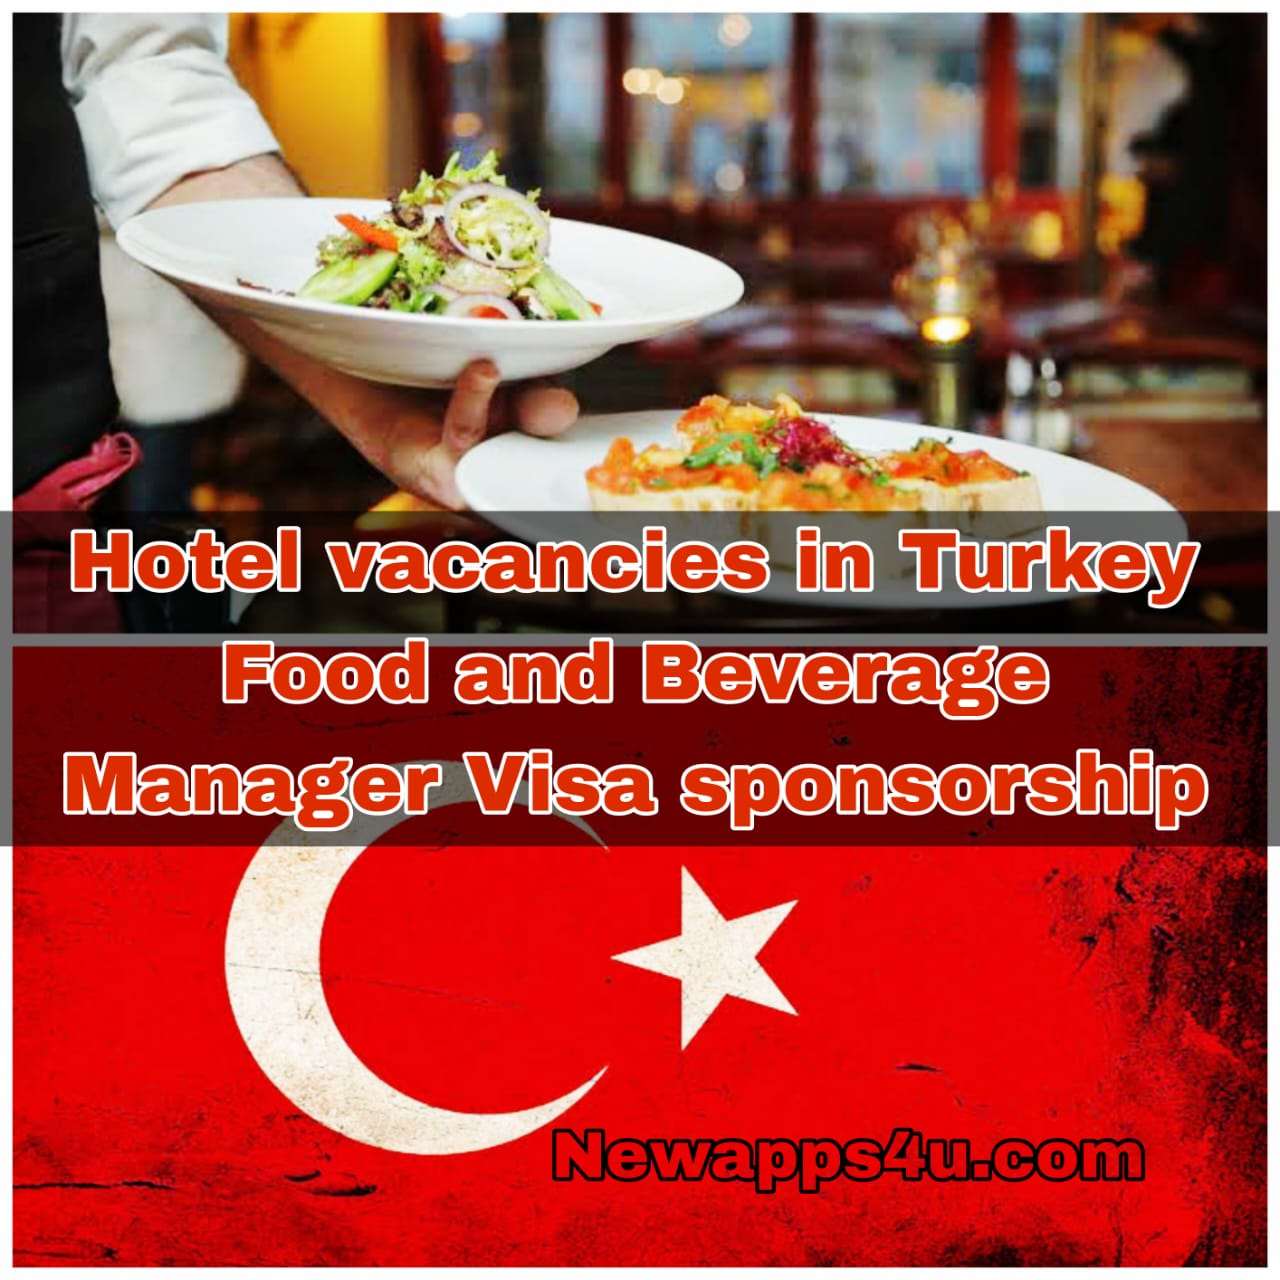 Hotel Vacancies in Turkey: Food and Beverage Manager visa sponsorship